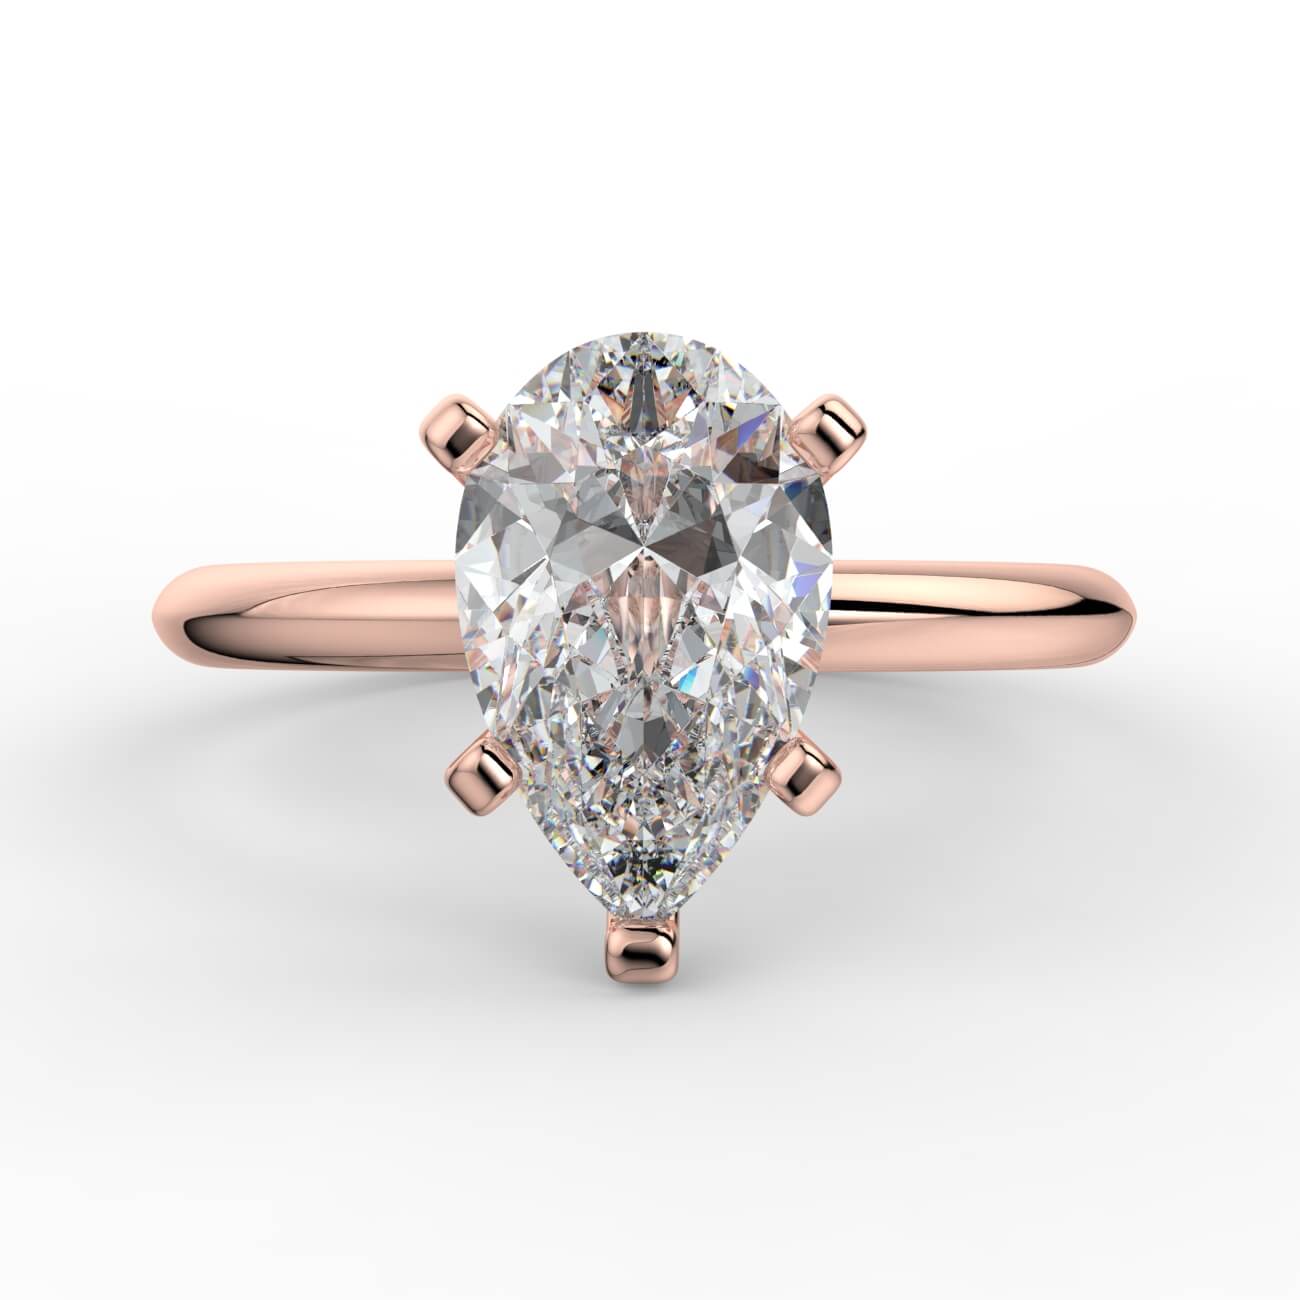 Knife-edge solitaire pear diamond engagement ring in rose gold – Australian Diamond Network